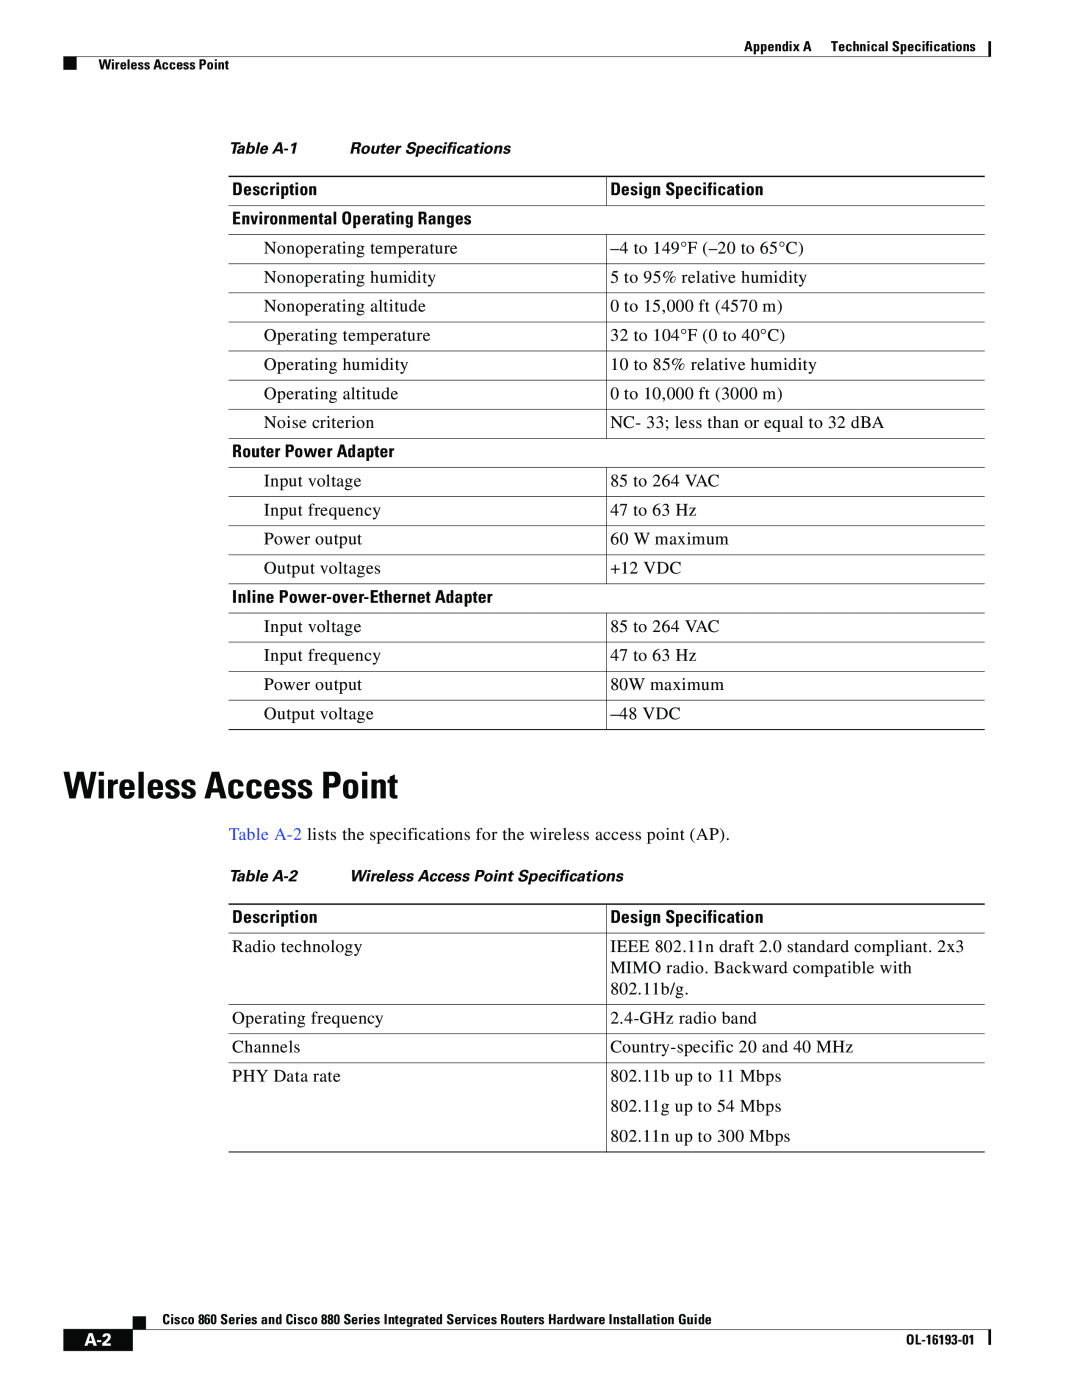 Cisco Systems HIG880, C892FSPK9, 861WGNPK9RF, 860 manual Wireless Access Point 